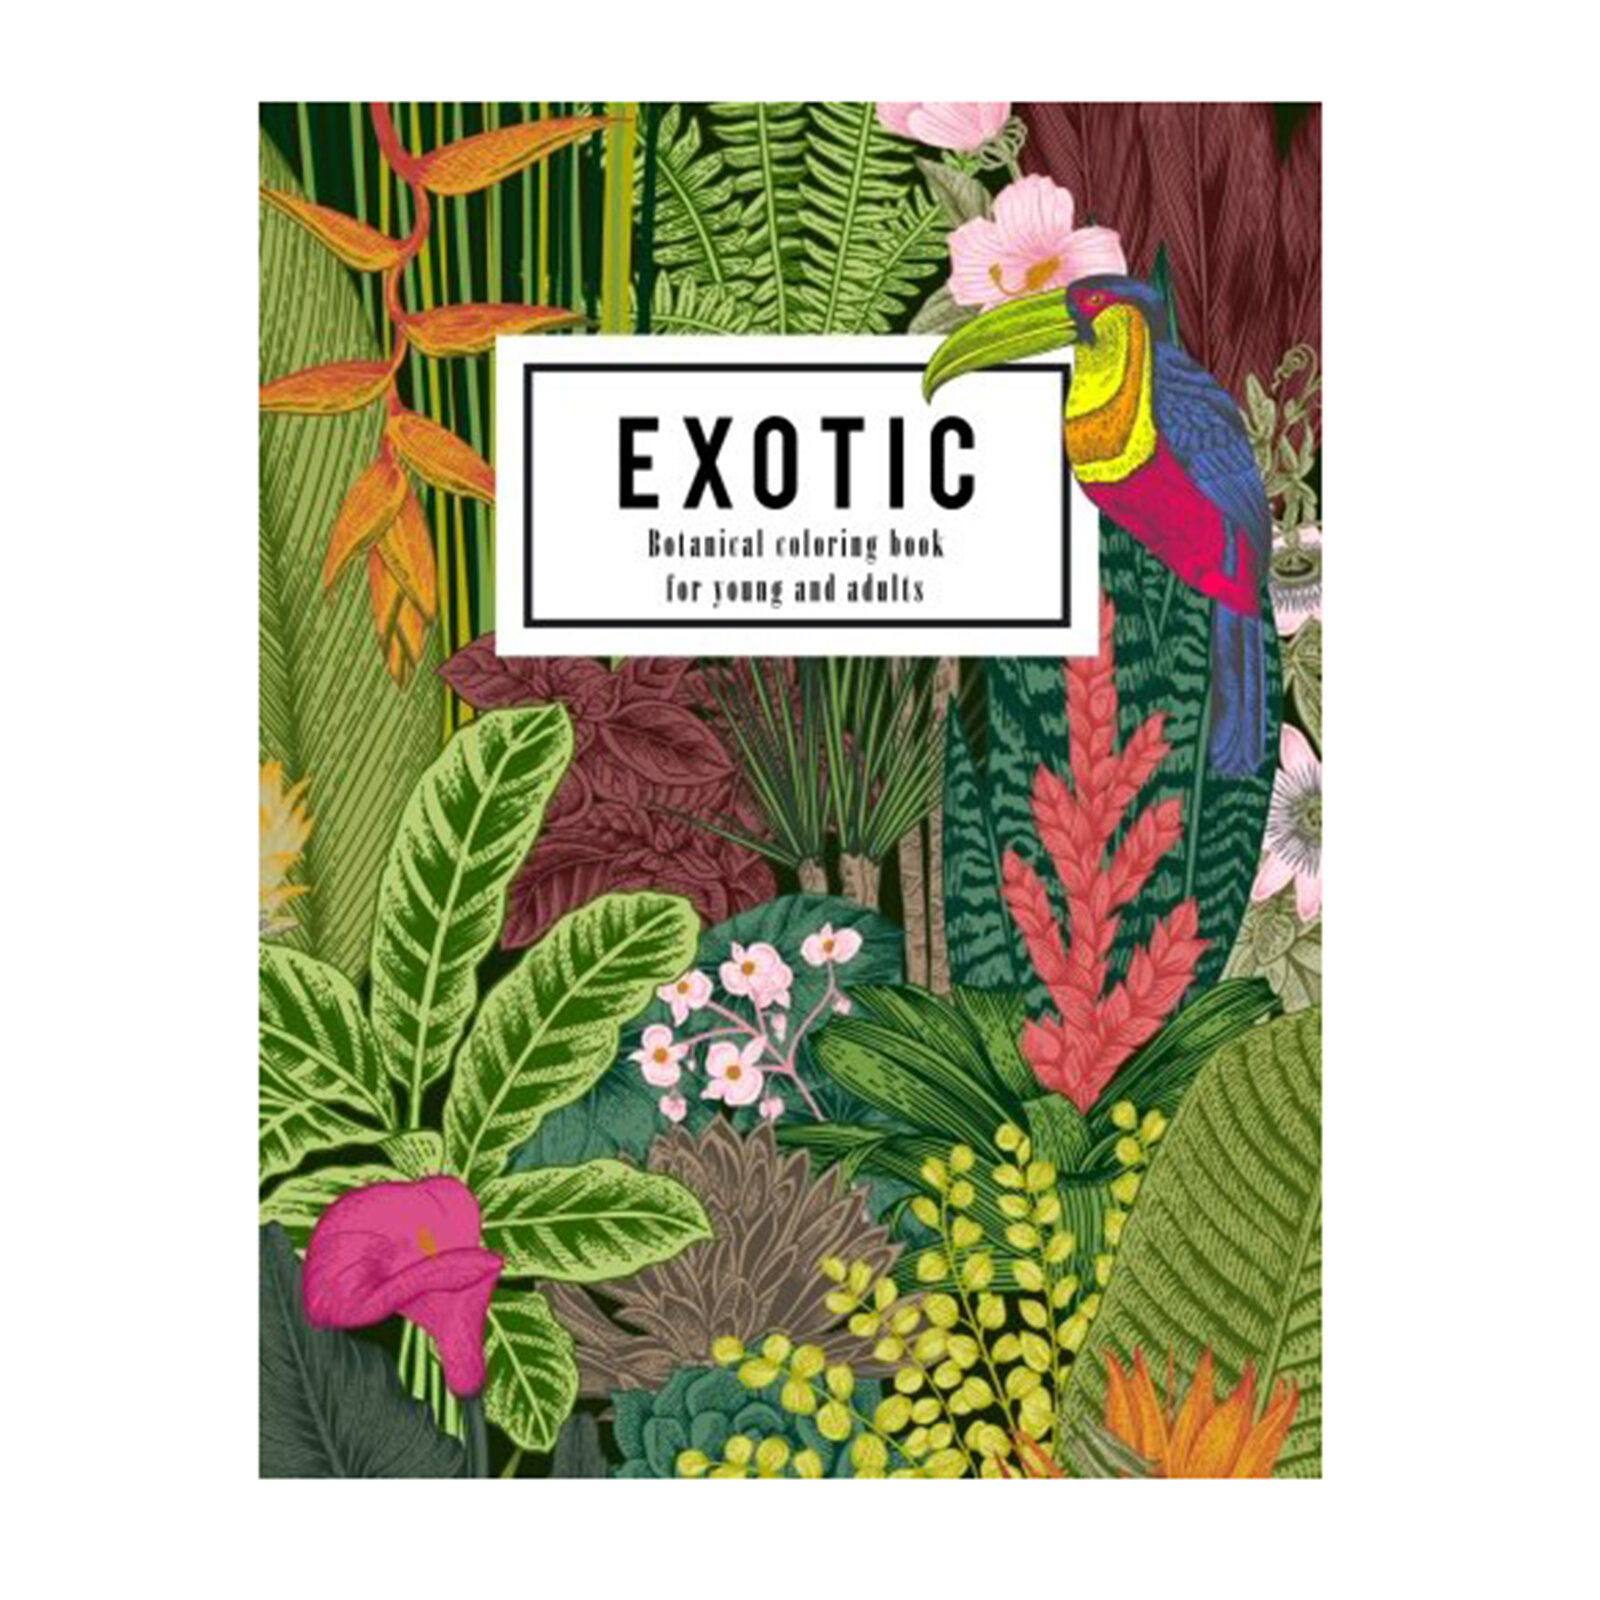 Exotic botanical coloring book, Emma A. Lynn, $7.99